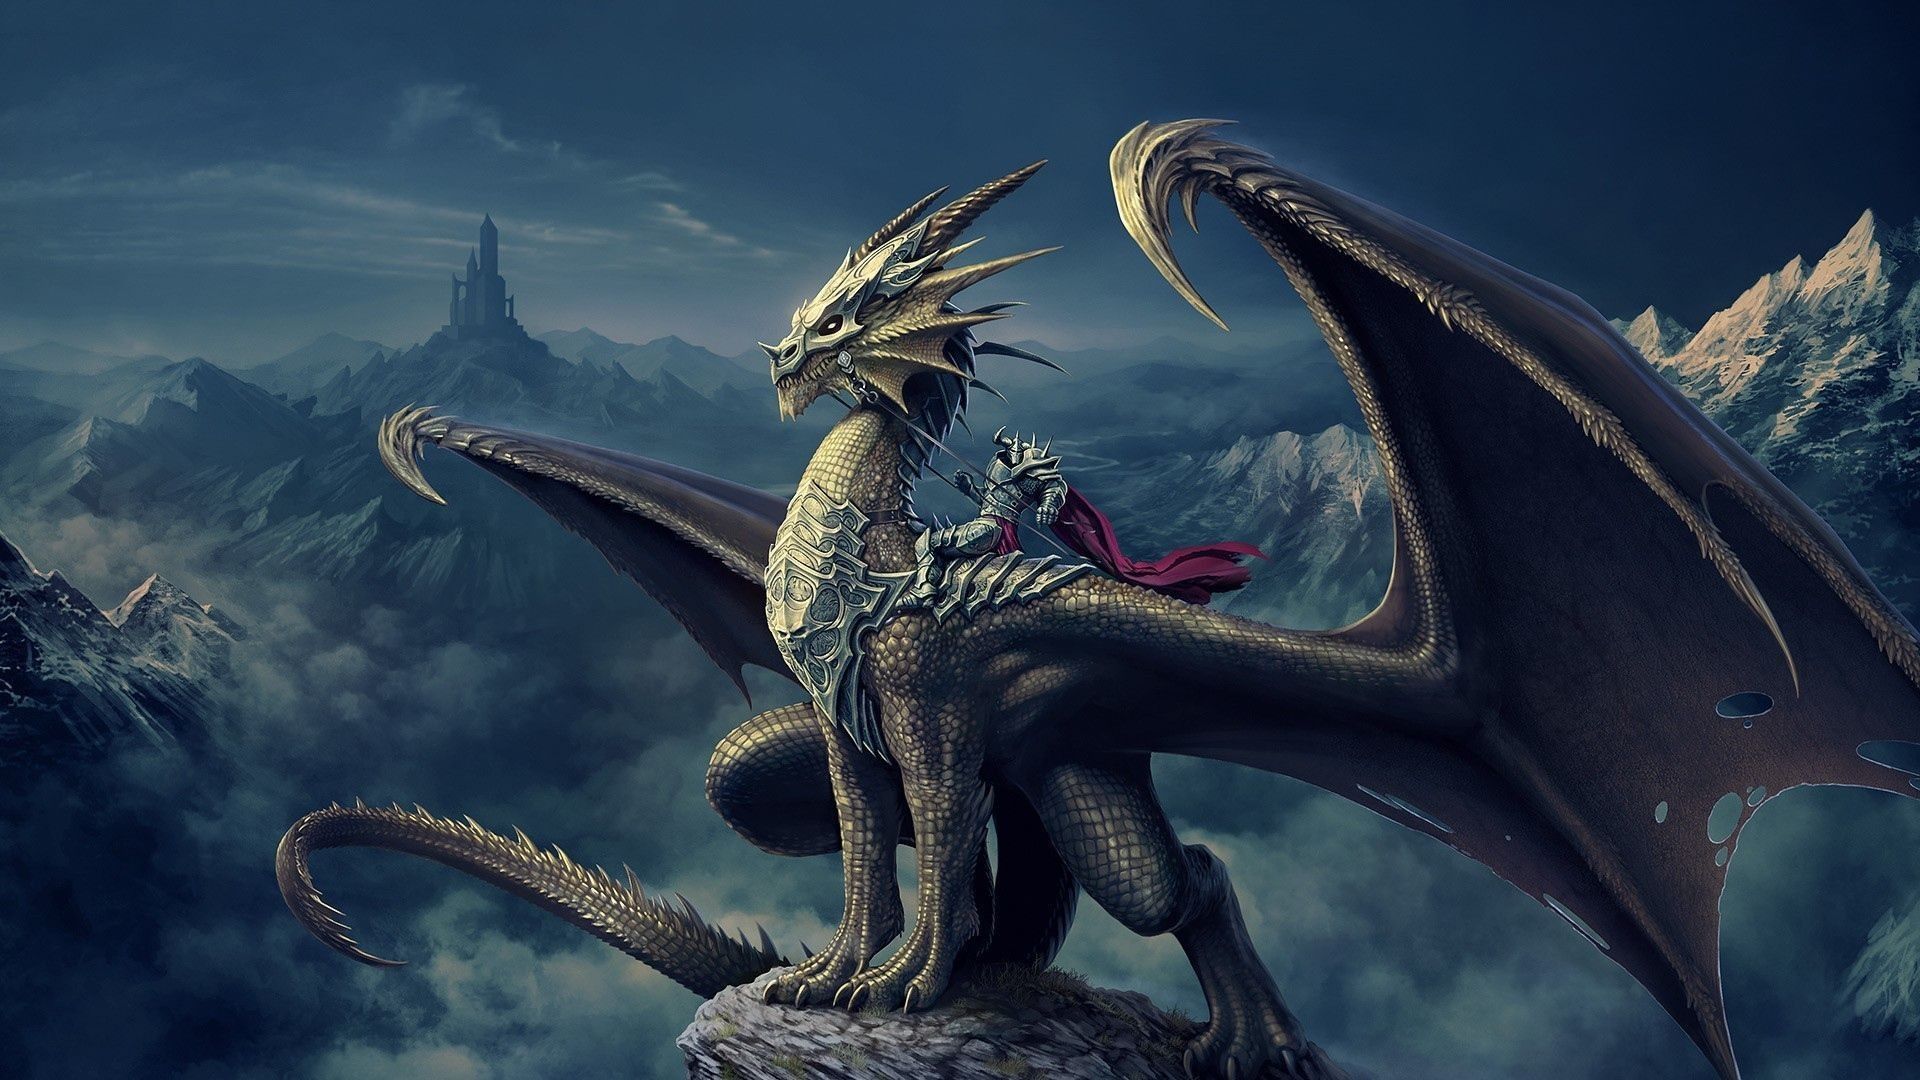 Red Epic Dragon by Greggoth on DeviantArt